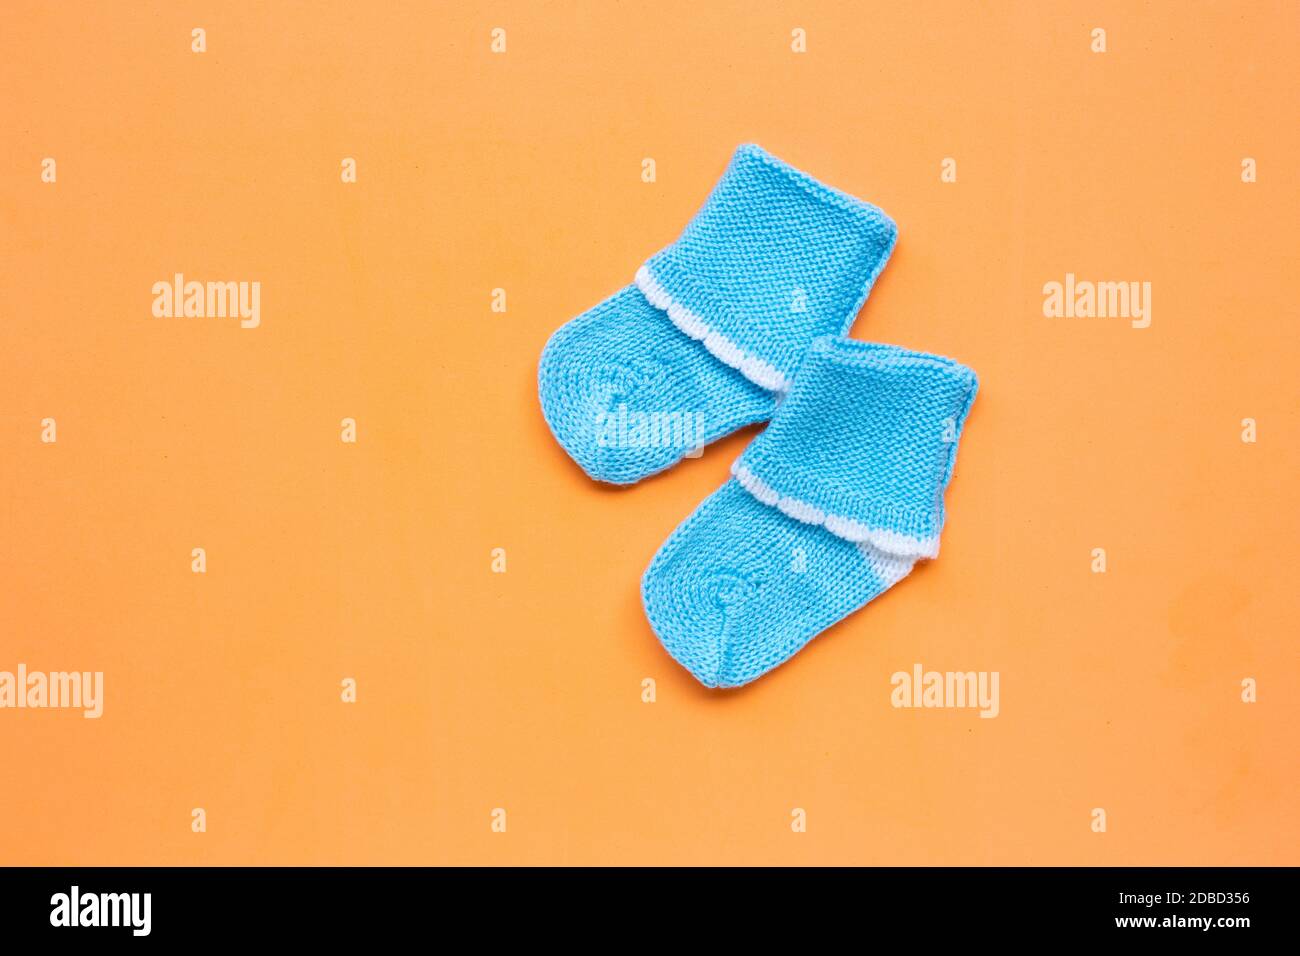 Baby socks on orange background. Top view Stock Photo